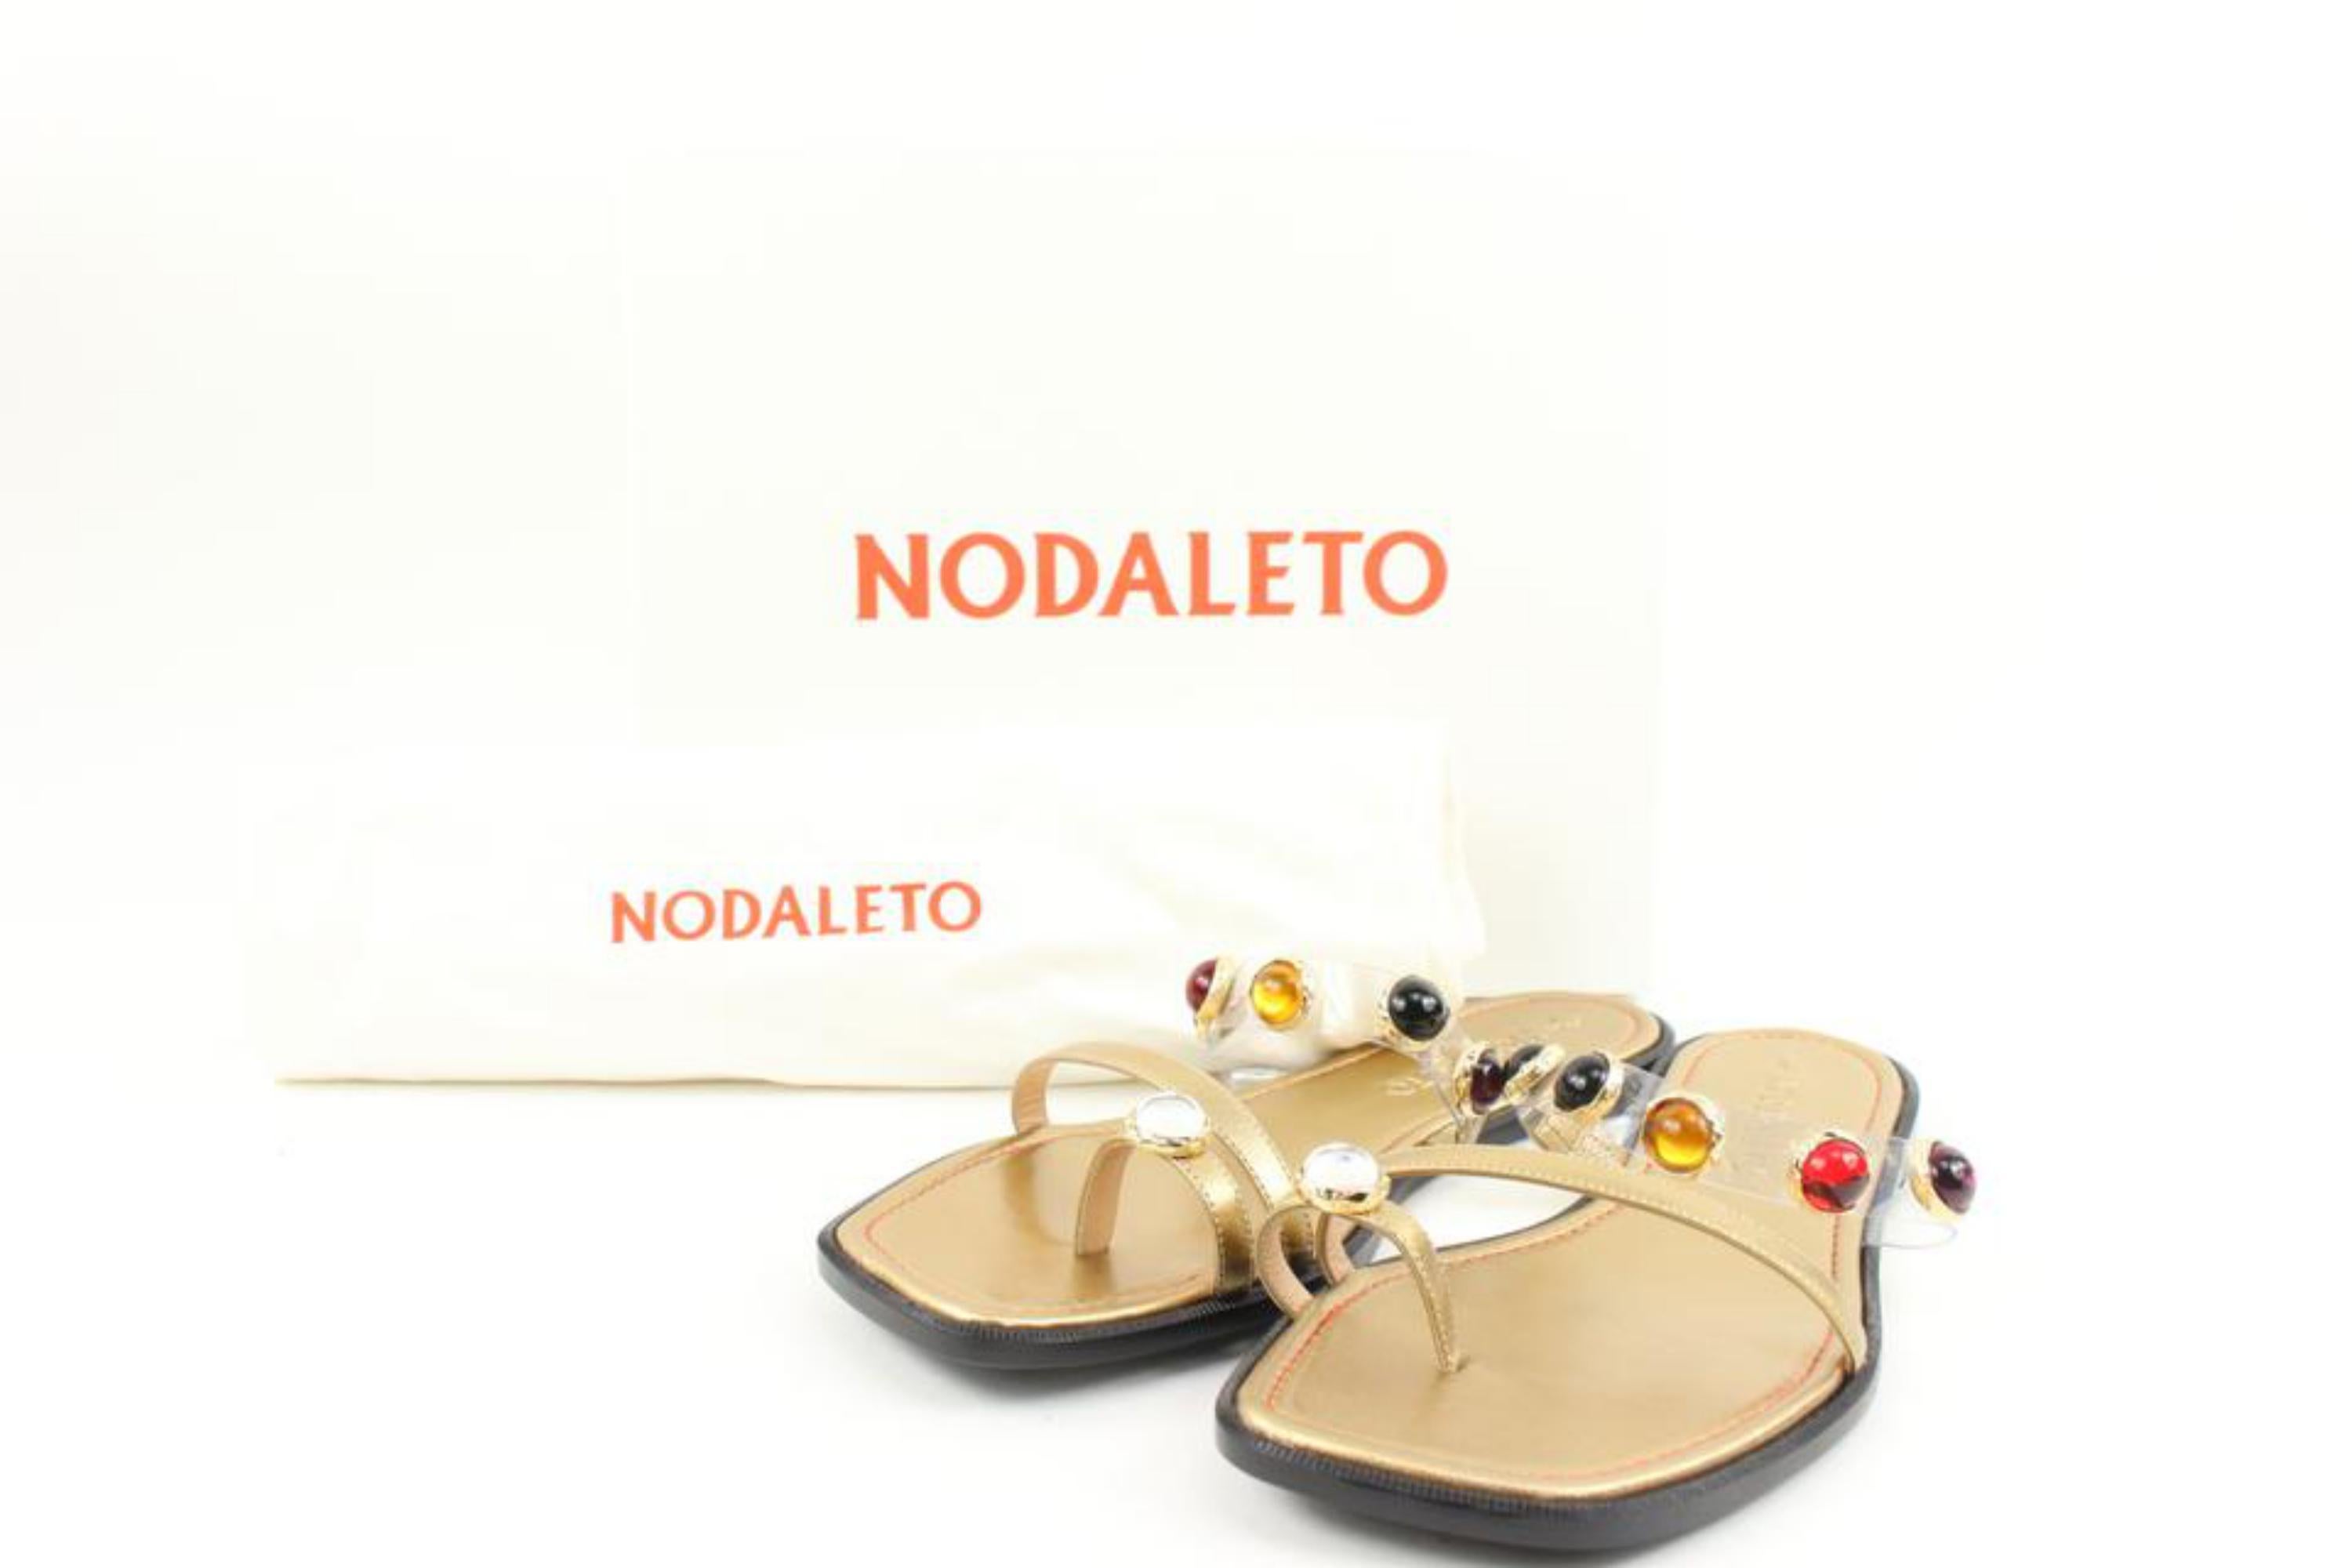 Nodaleto Size 39 Bulla Salem Flat Jeweled Sandals 35n37s
Made In: Venice
Measurements: Length:  10.4